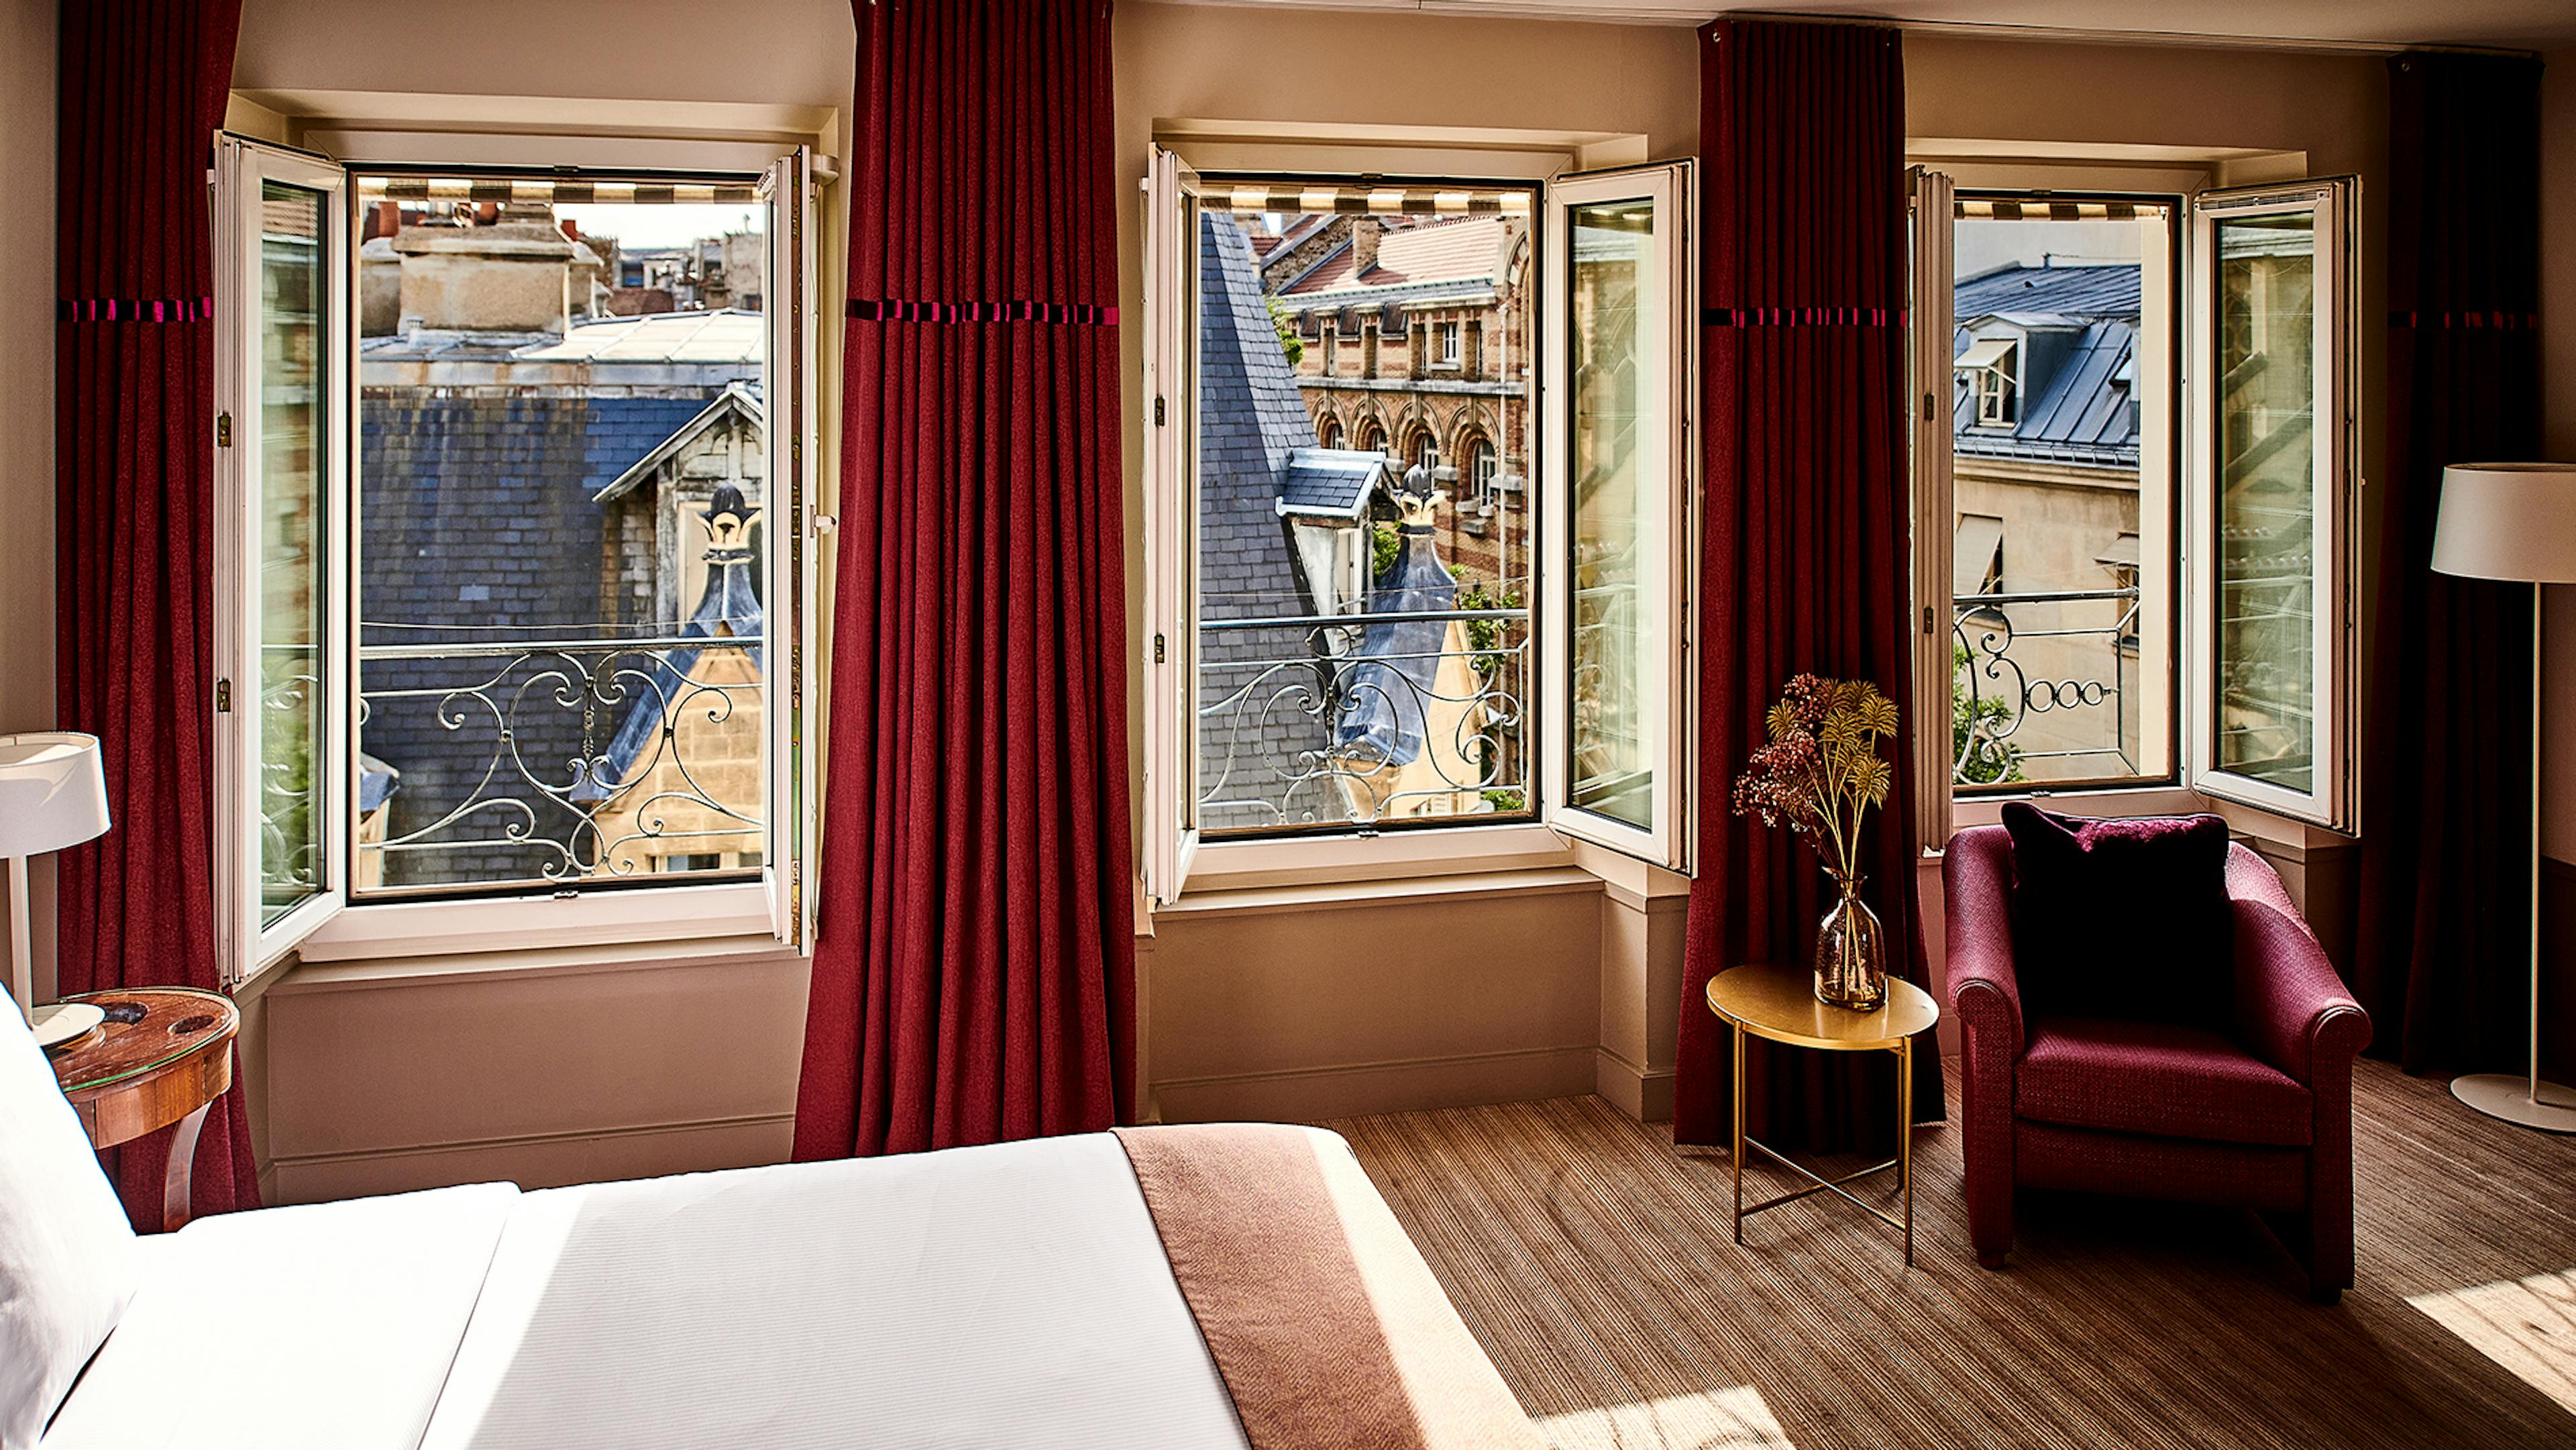 Discover France's heritage - Hotels, Castles, Residences